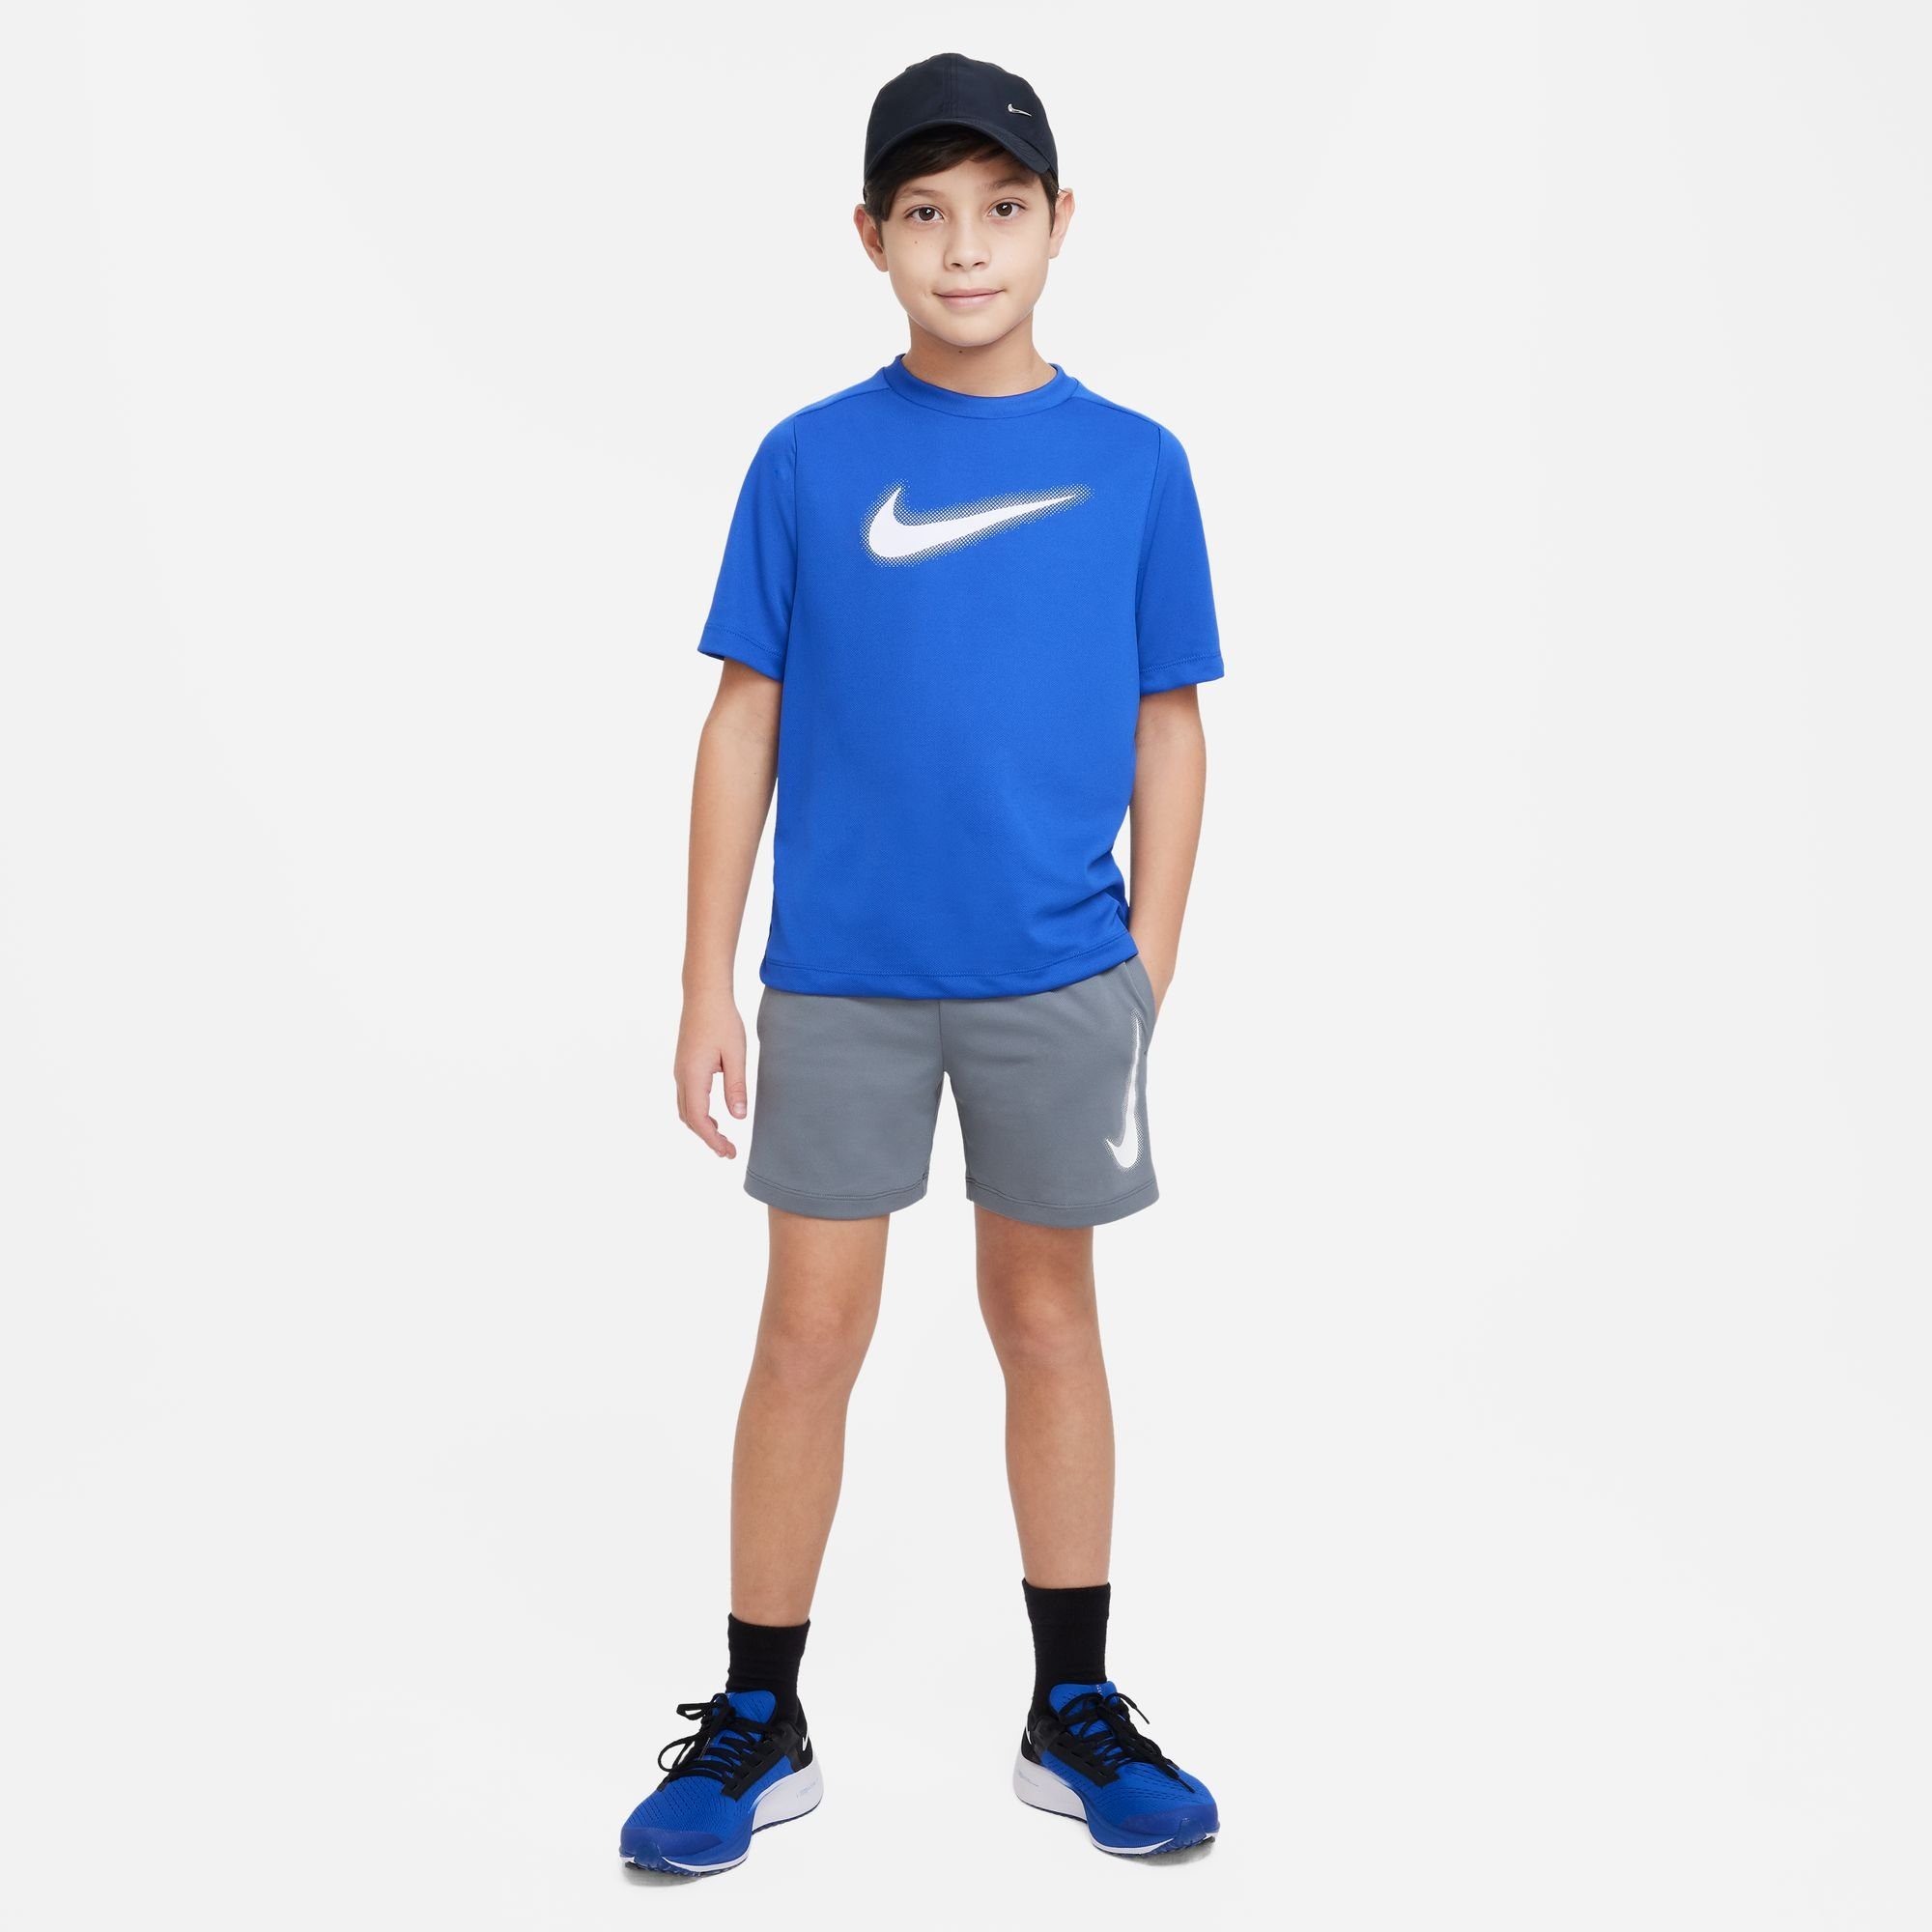 MULTI+ KIDS' Nike DRI-FIT GAME TRAINING GRAPHIC Trainingsshirt TOP (BOYS) ROYAL/WHITE BIG